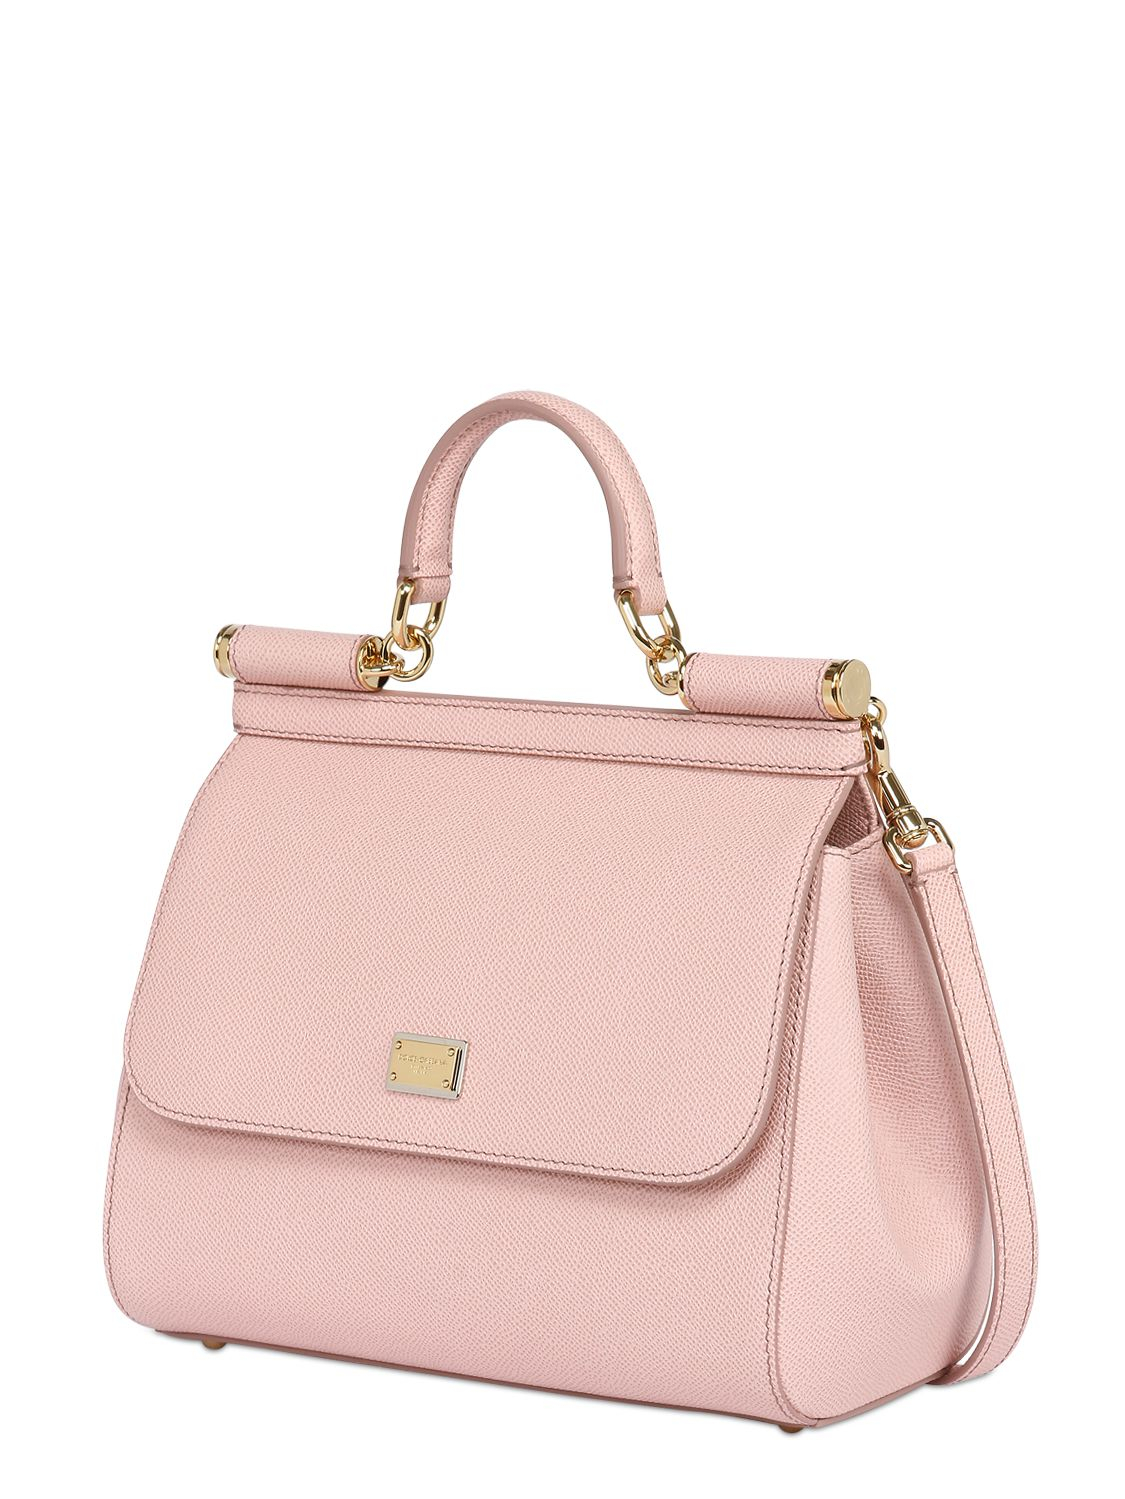 Lyst - Dolce & Gabbana Medium Sicily Dauphine Leather Bag in Pink